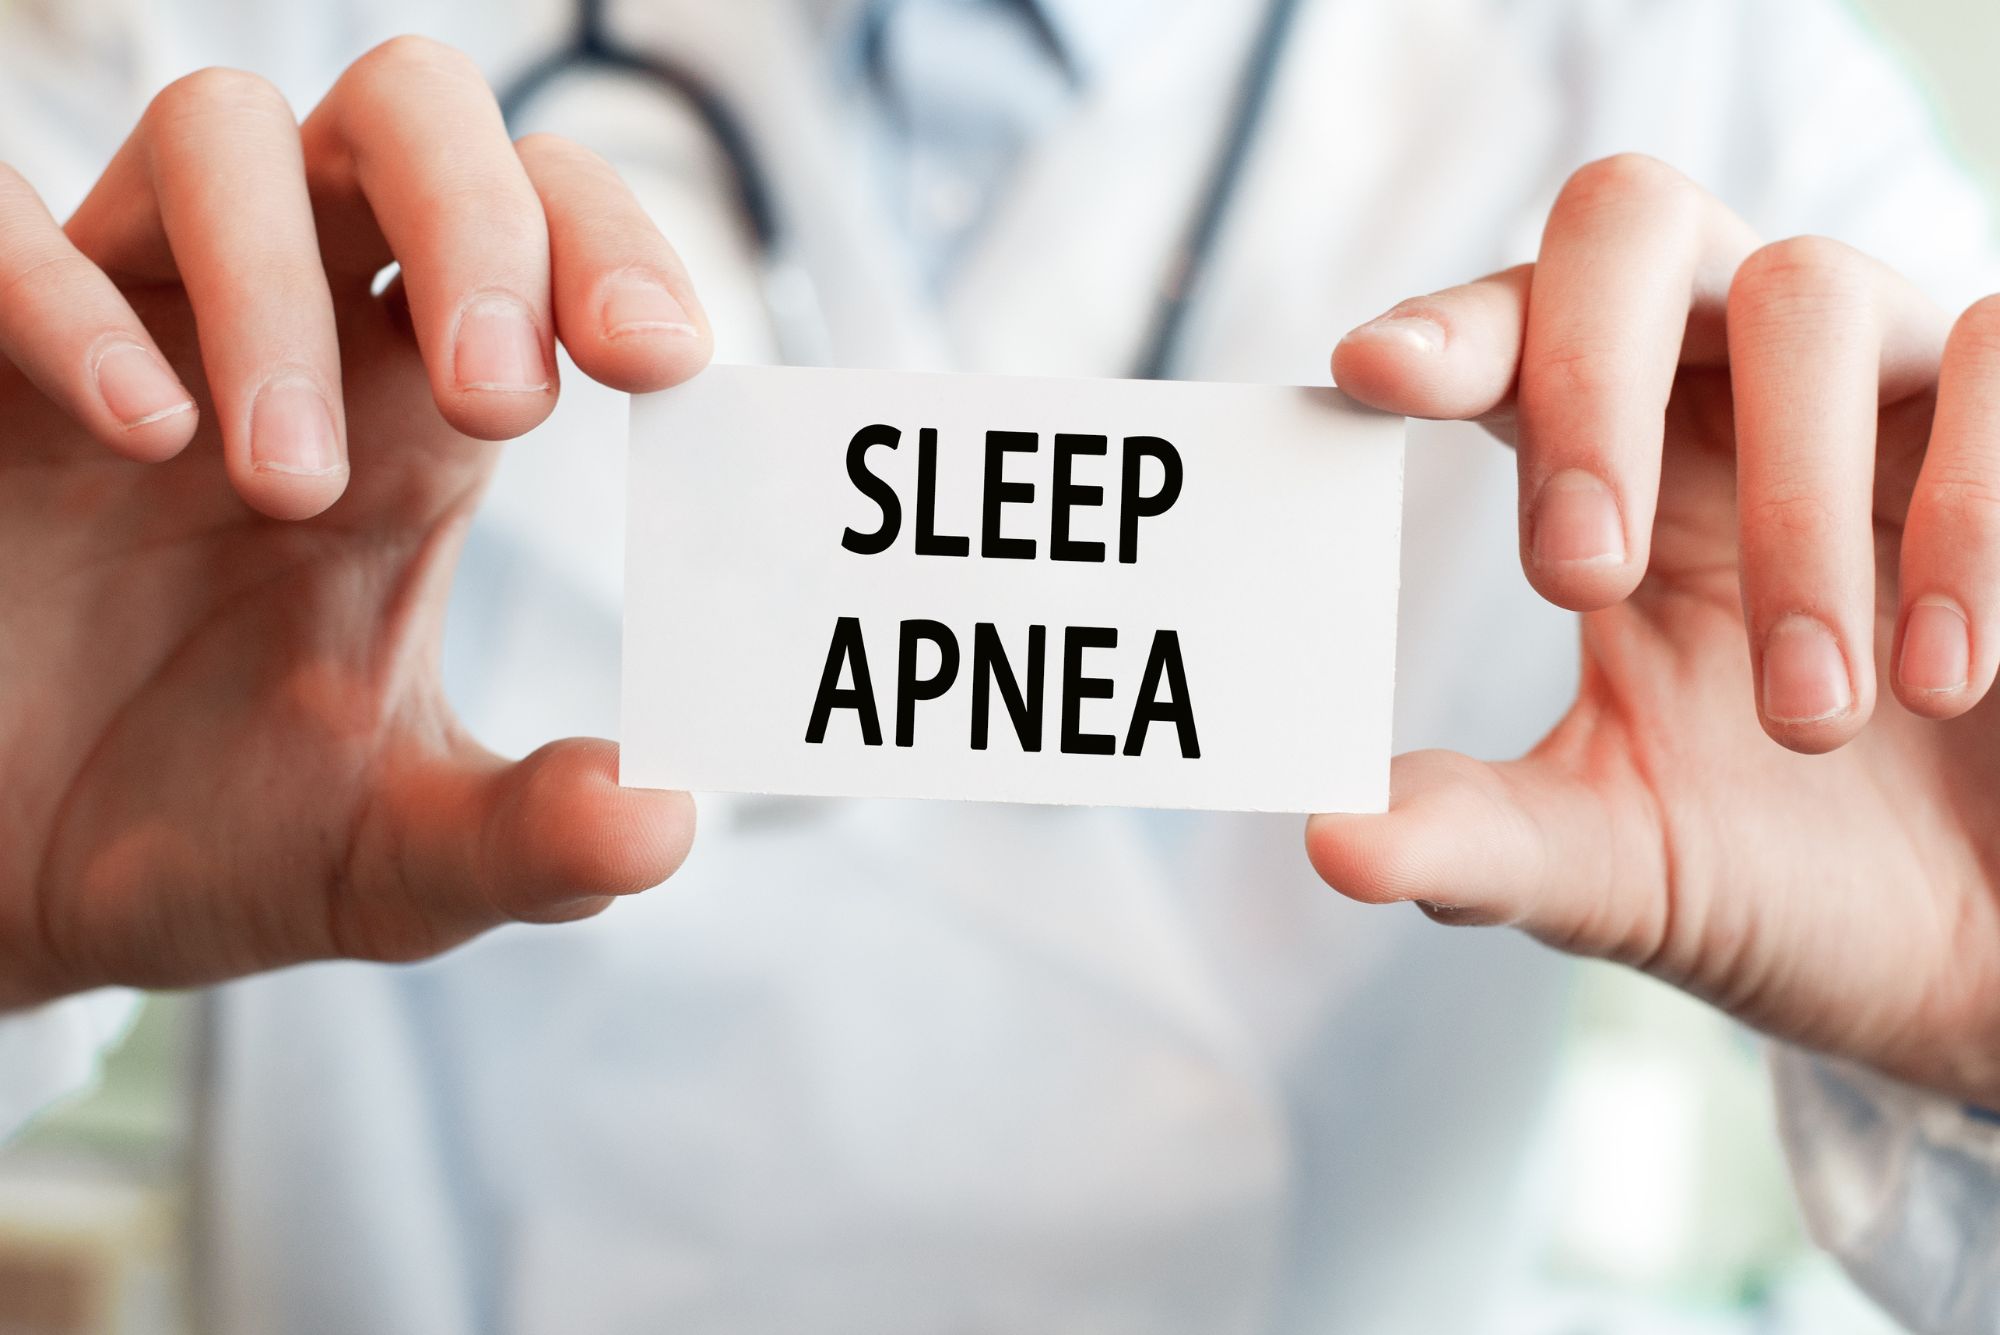 A person holding a card that says sleep apnea, and wondering if sleep apnea is genetic/hereditary.